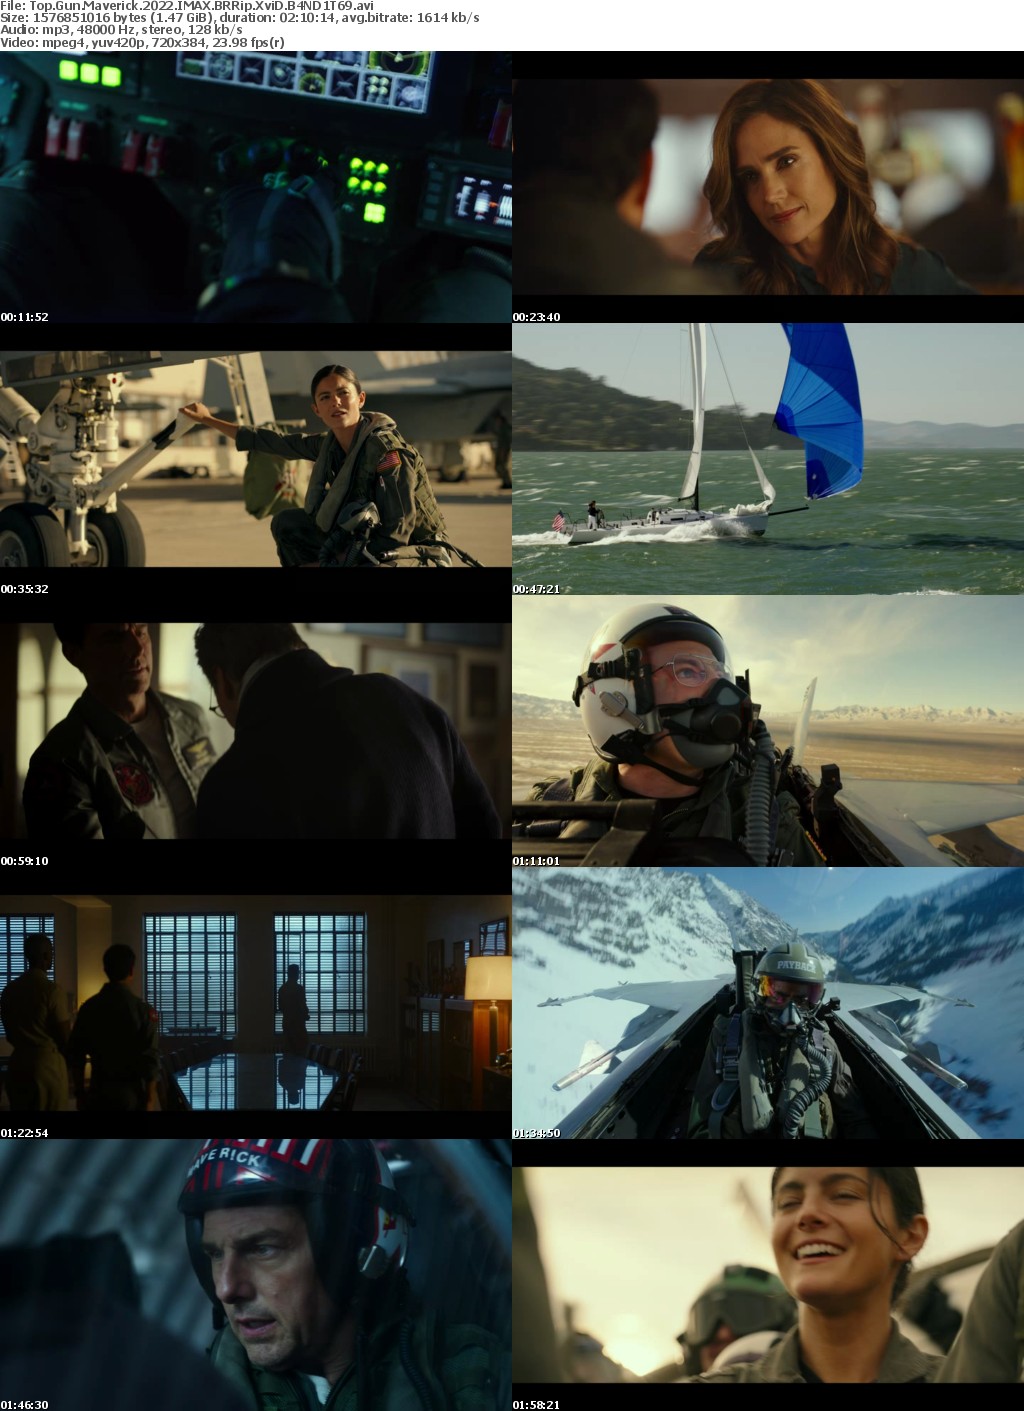 Top Gun Maverick 2022 IMAX BRRip XviD B4ND1T69